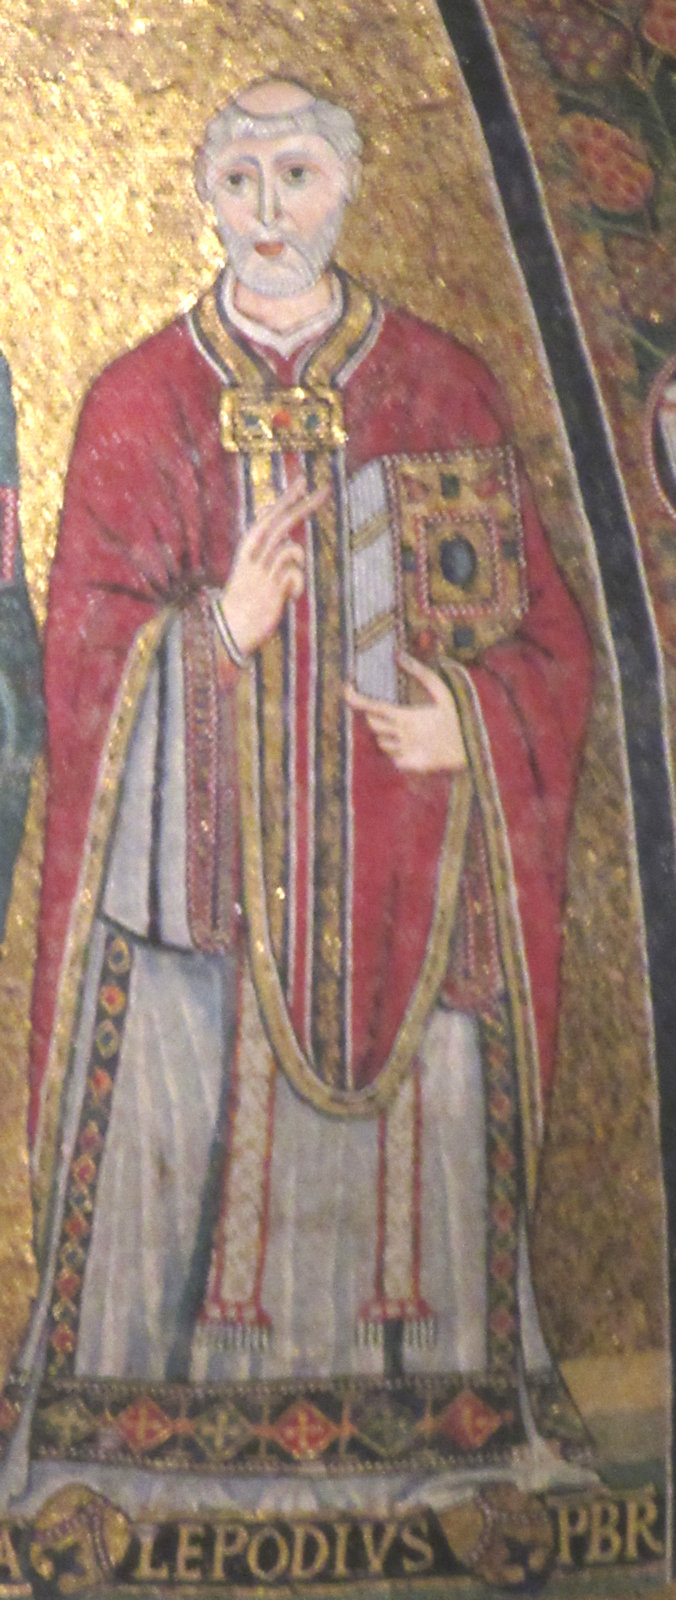 Apsismosaik, um 1140, in der Kirche Santa Maria in Trastevere